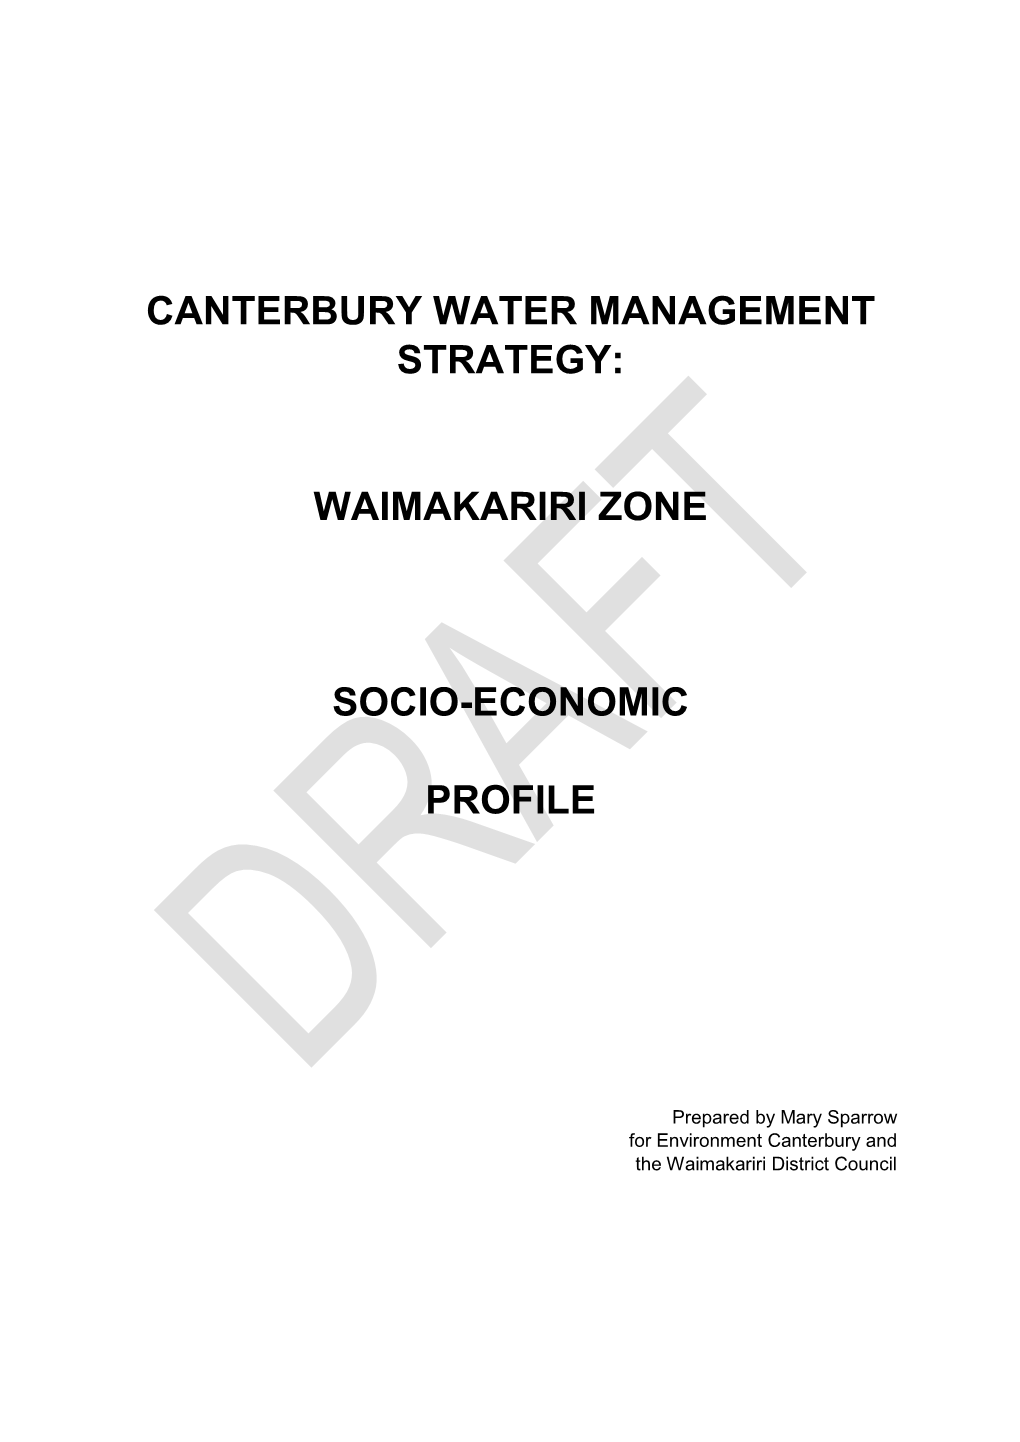 Waimakariri Zone Socio-Economic Profile